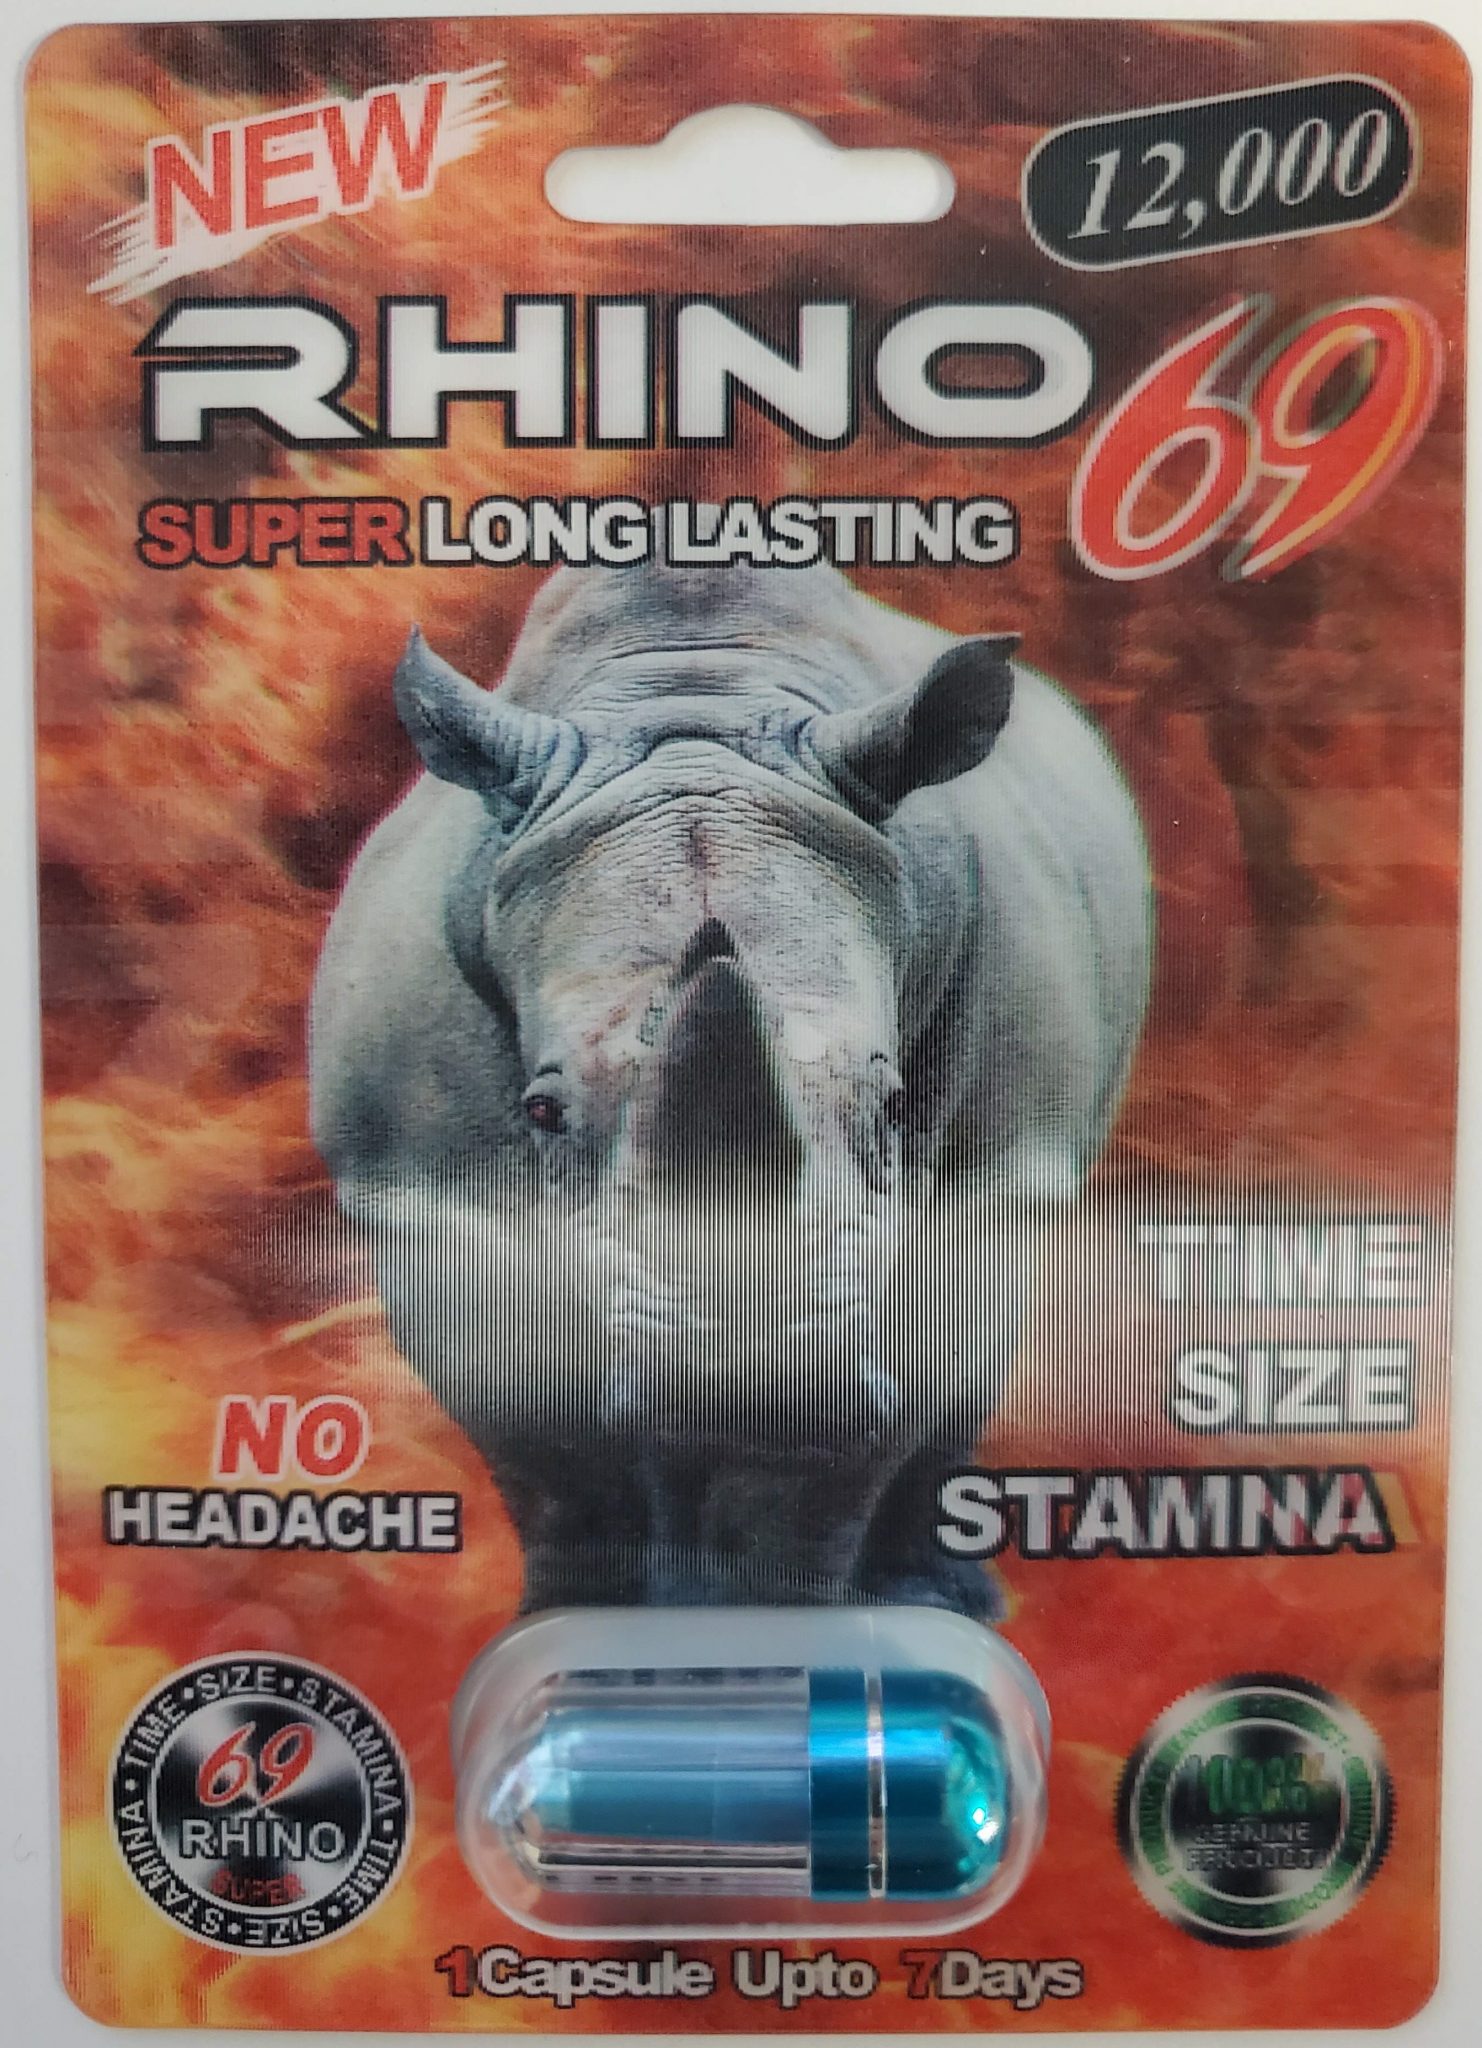 rhino 7 platinum 7000 reviews